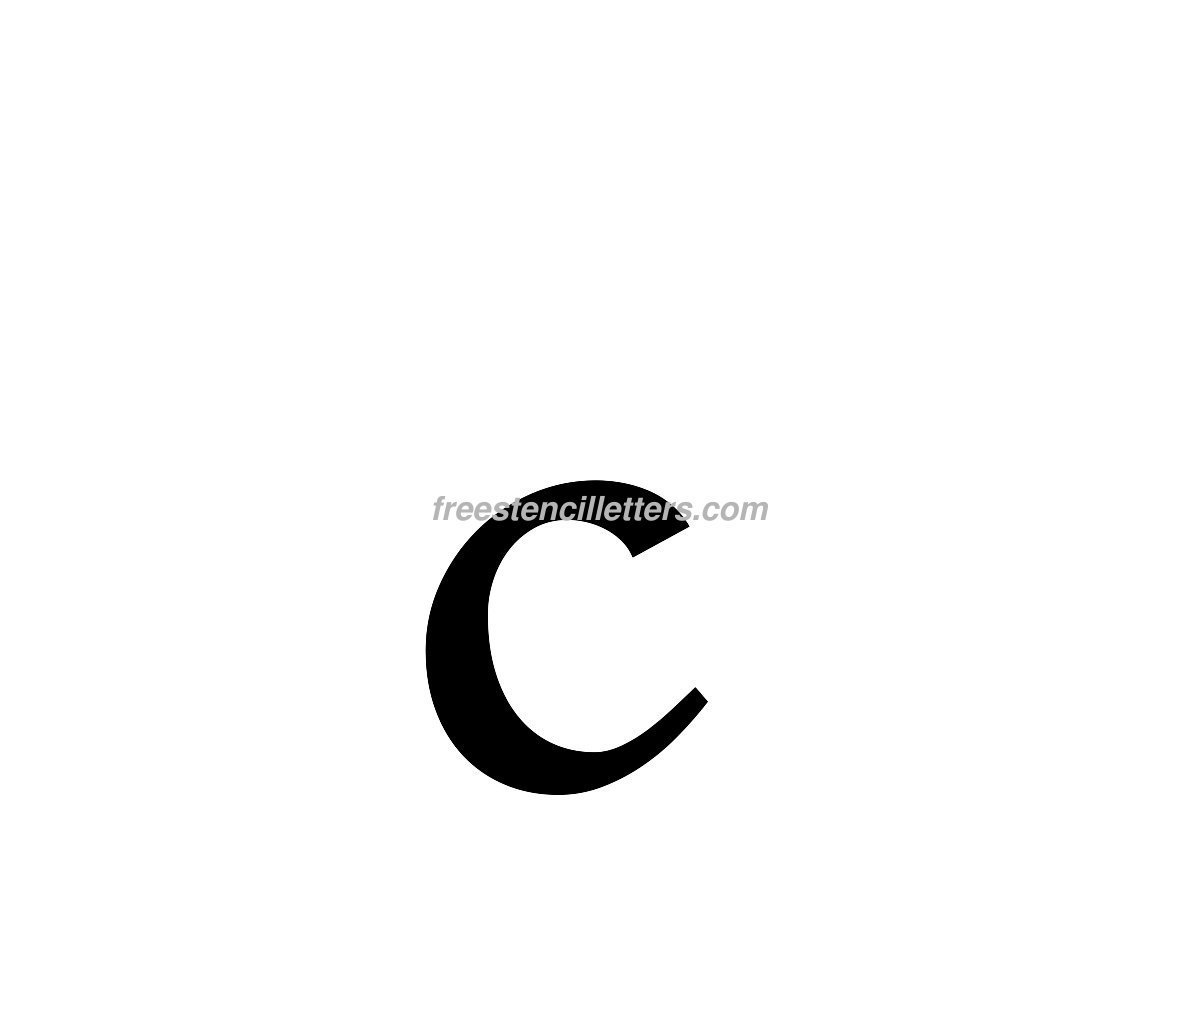 lowercase c